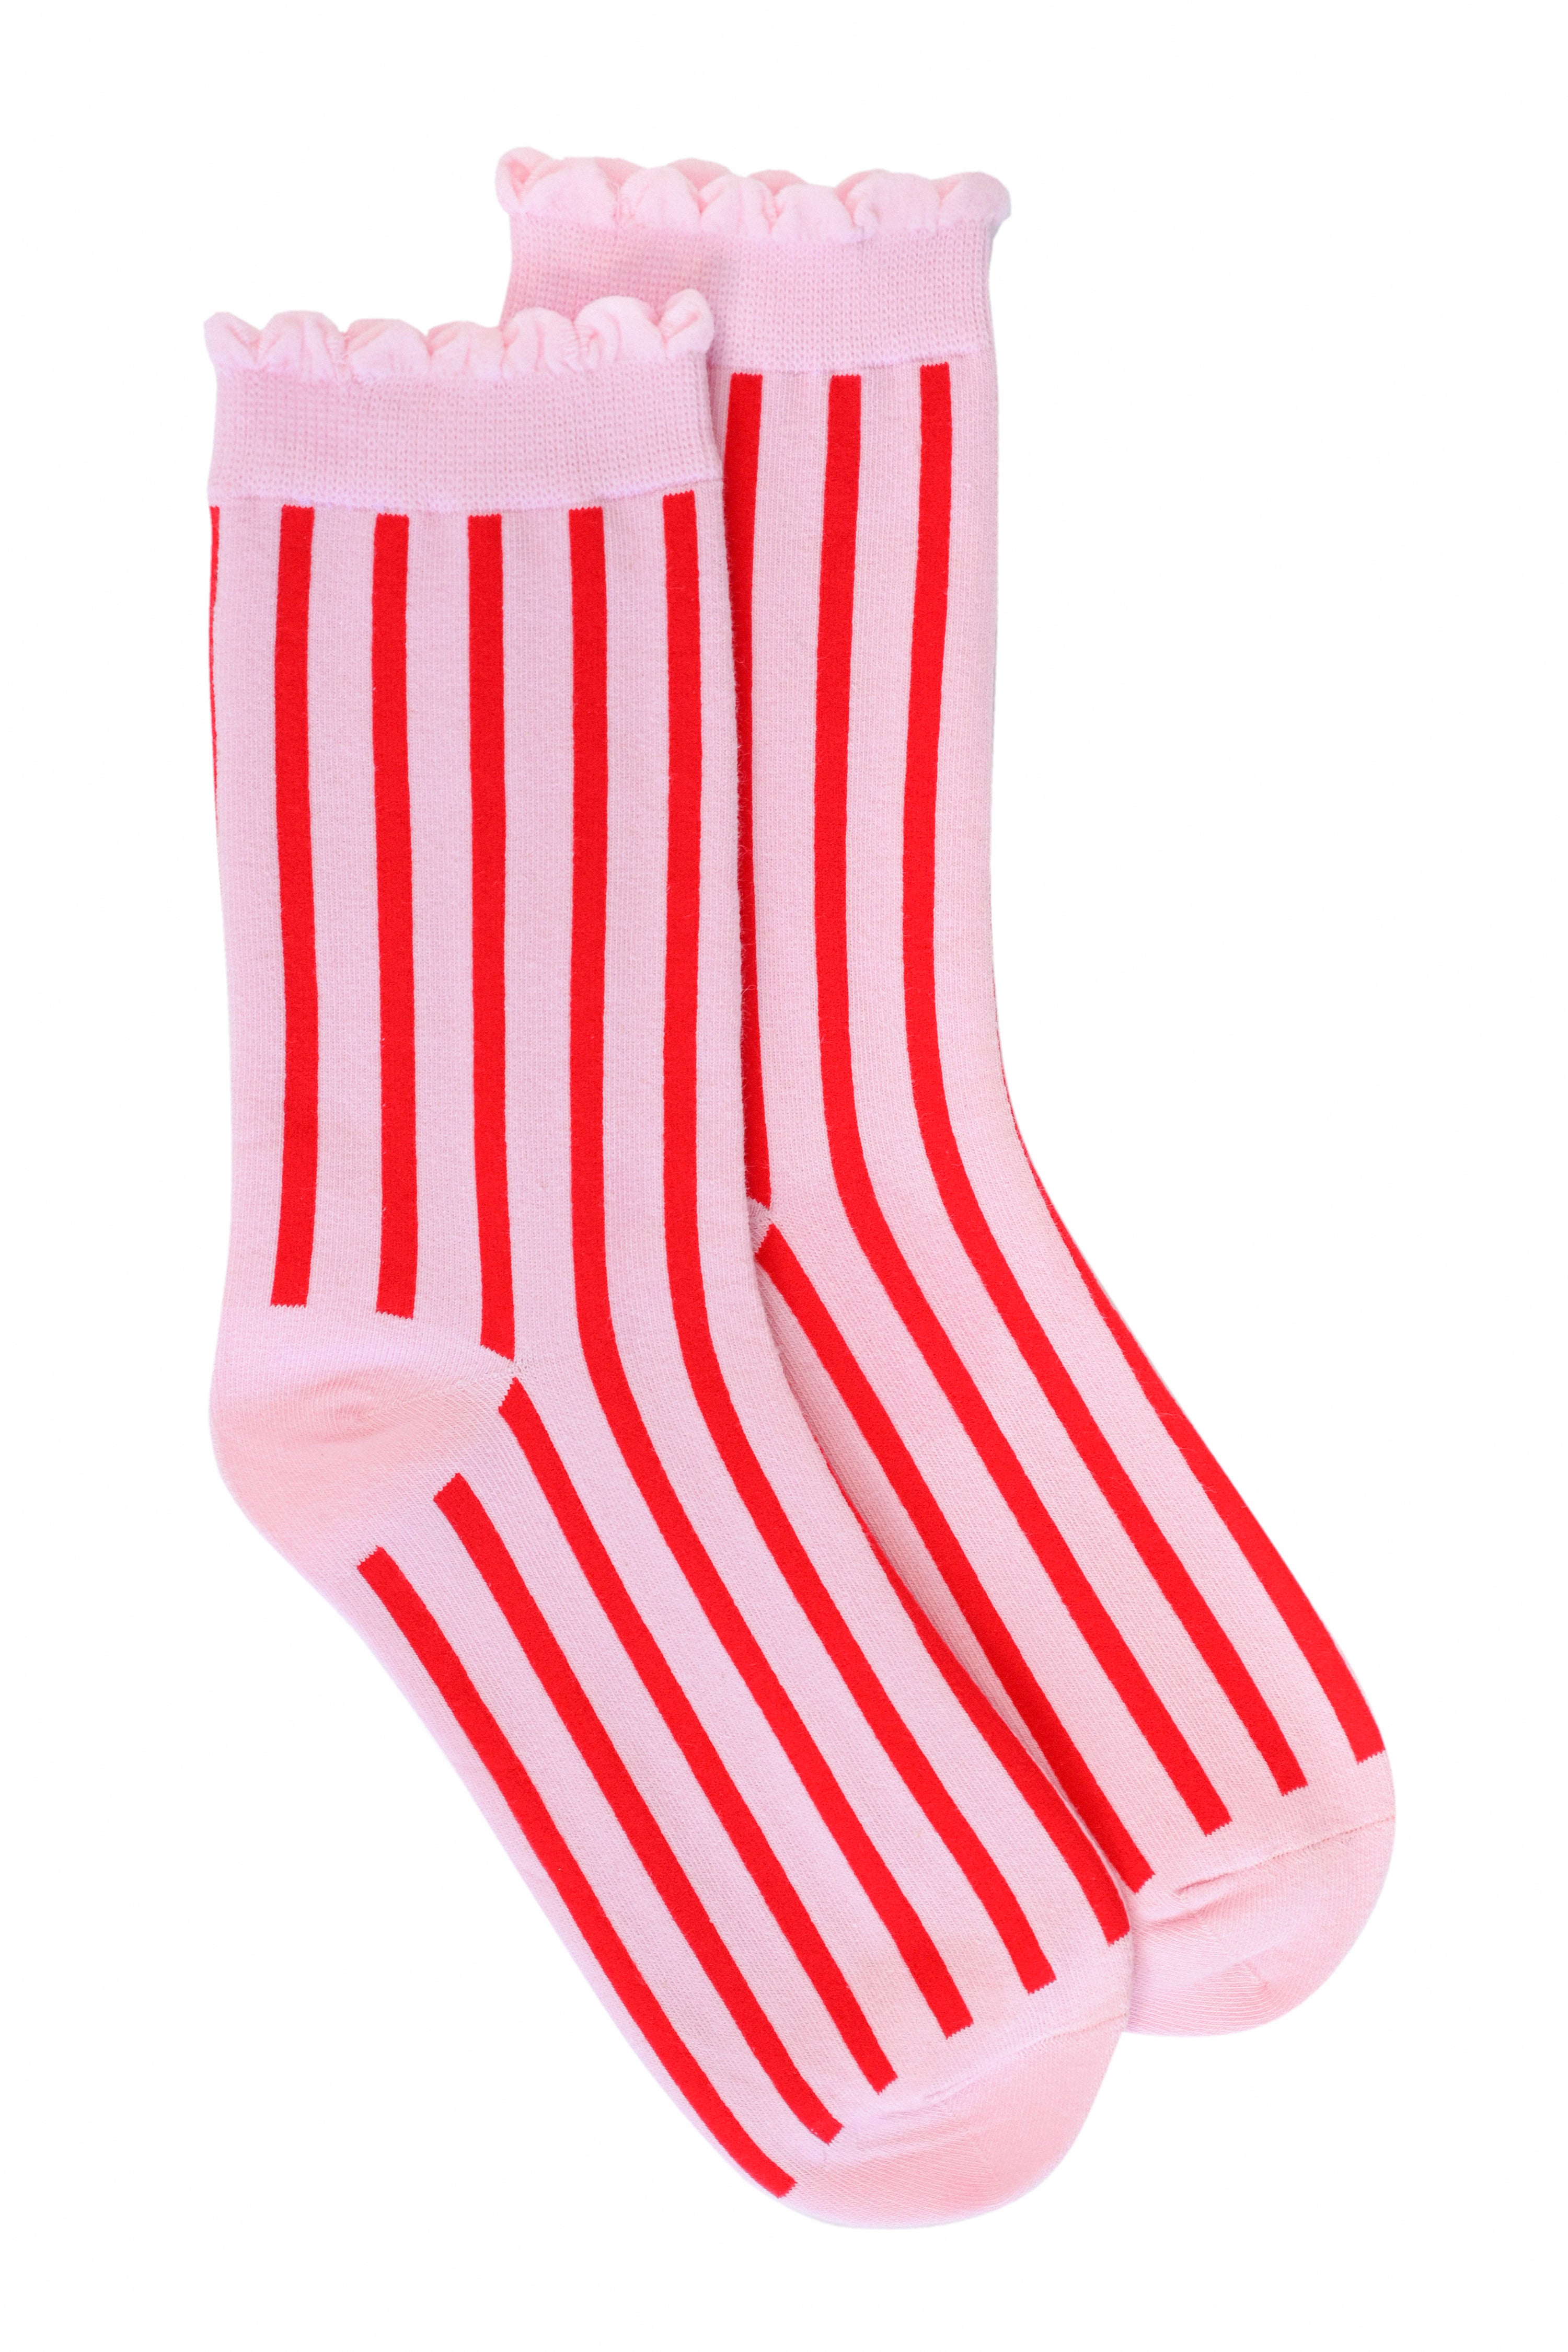 Candy Striper Socks